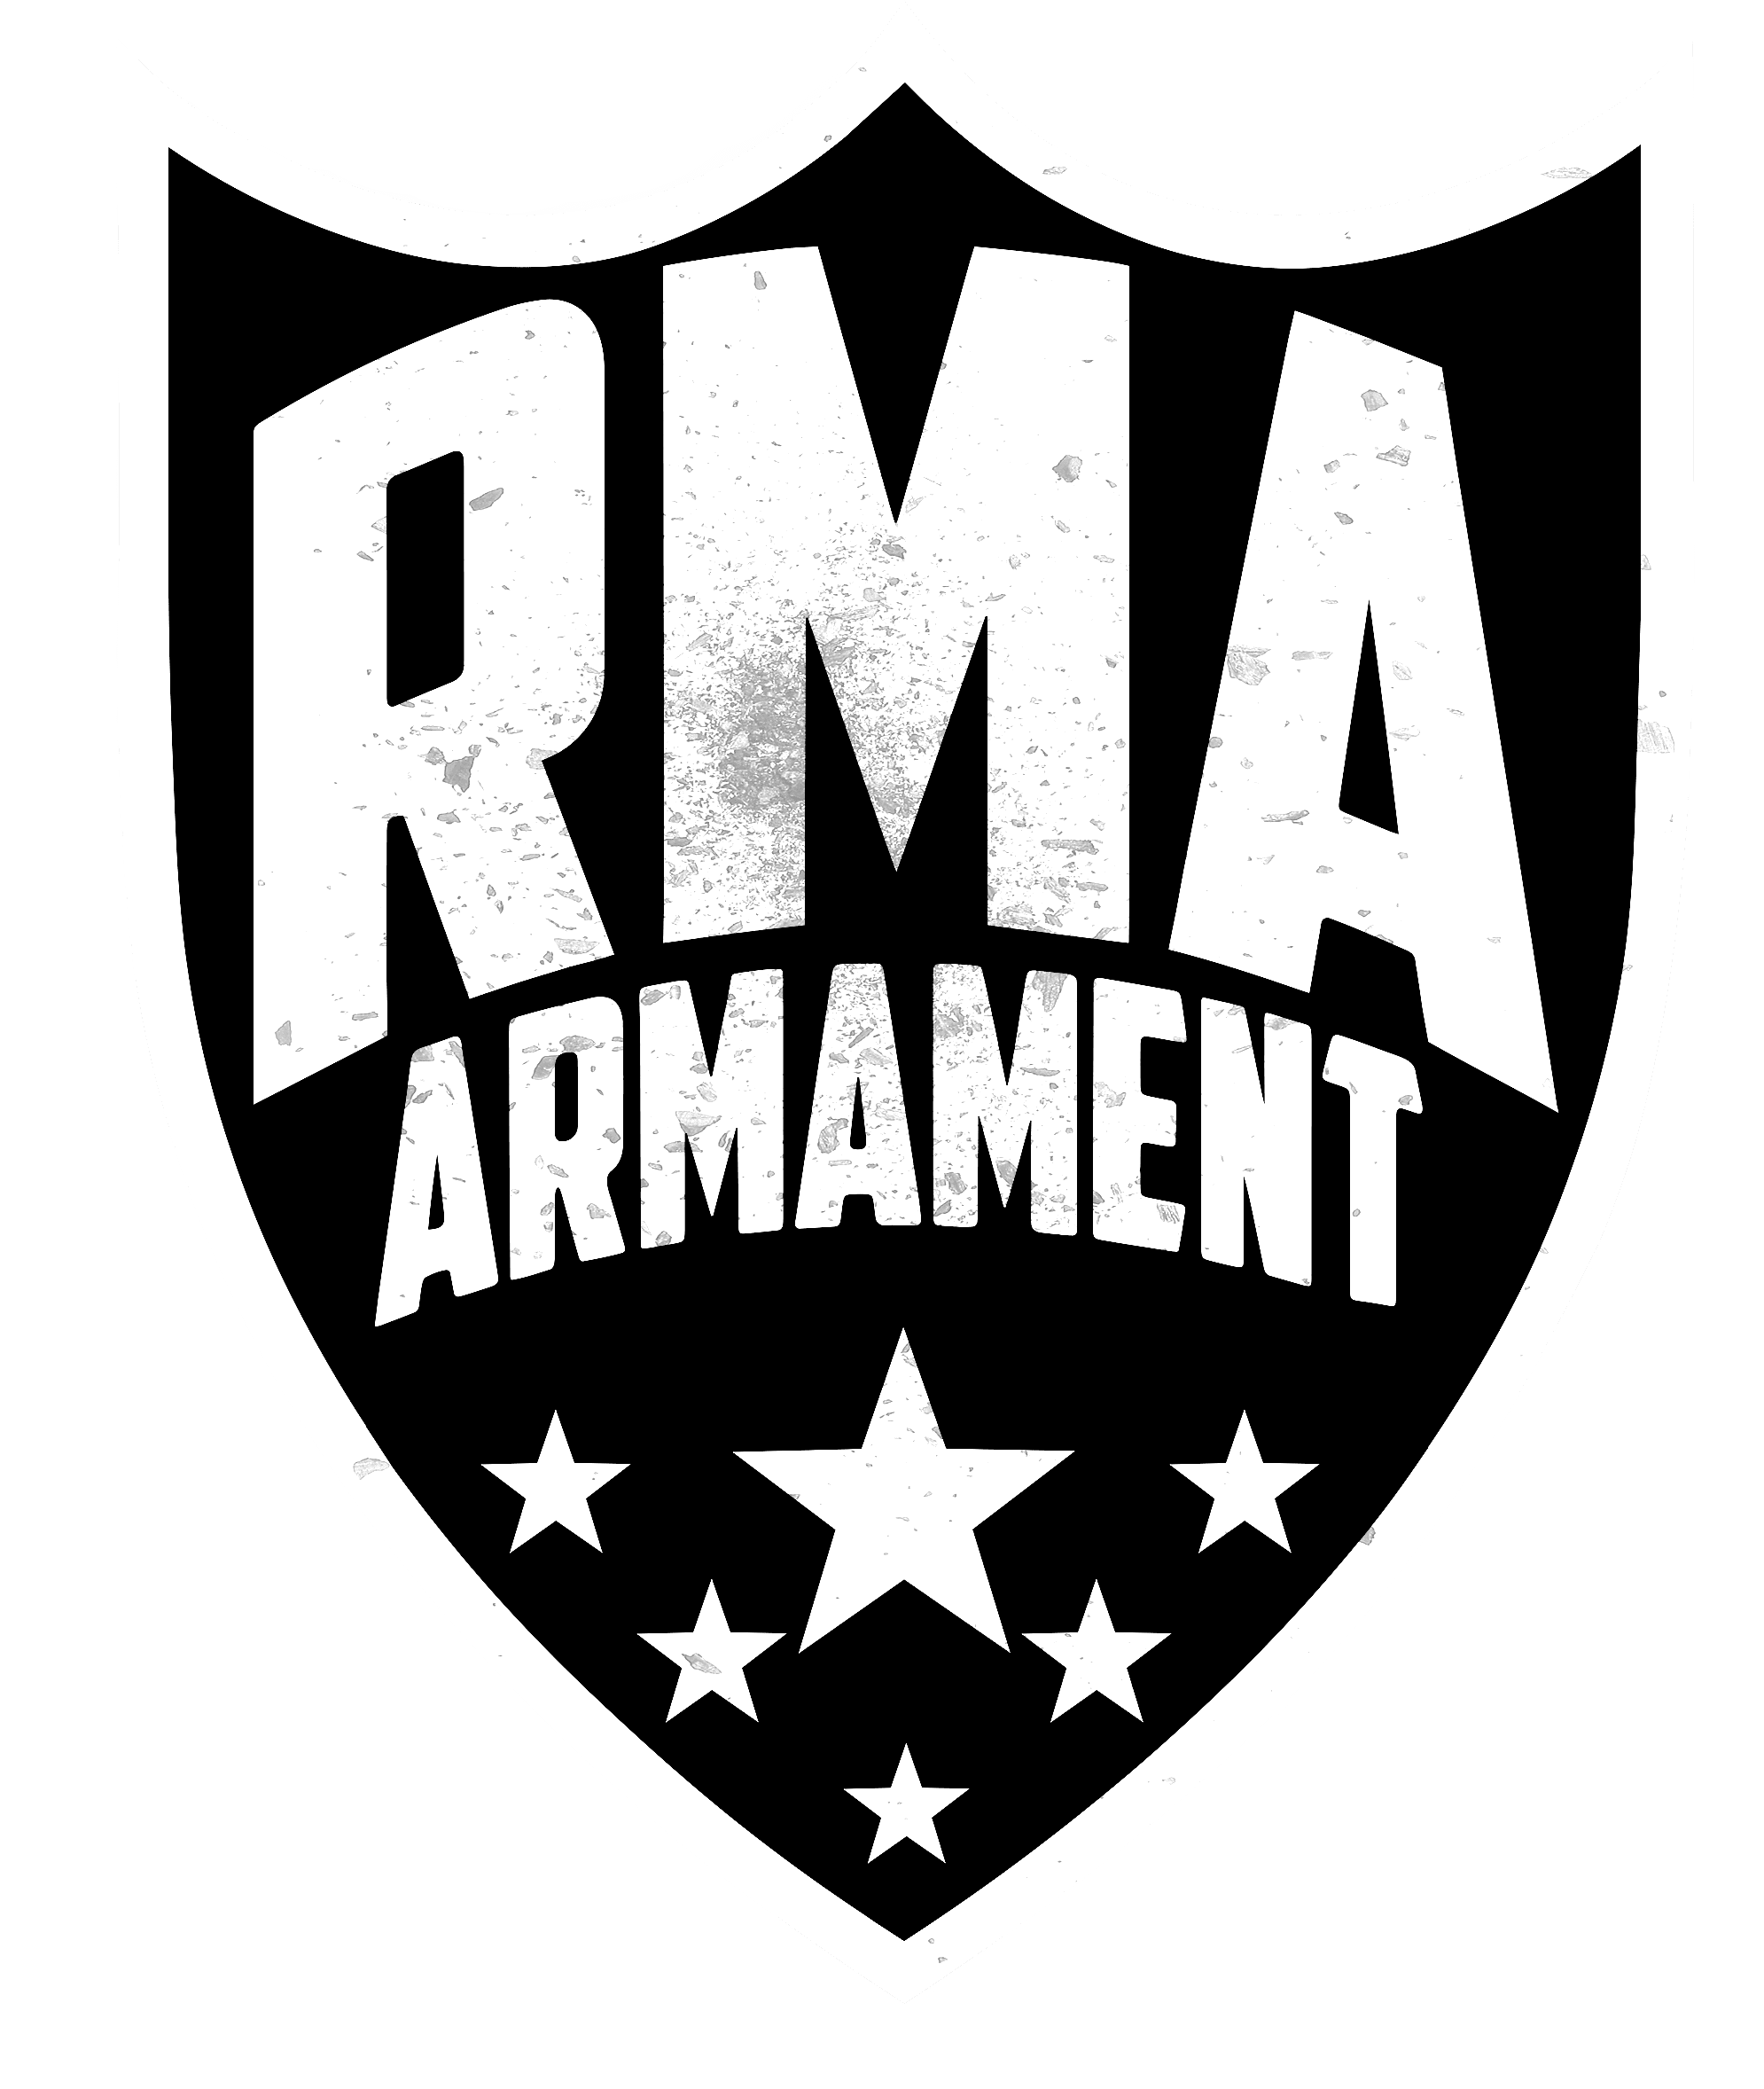 RMA Shield Logo